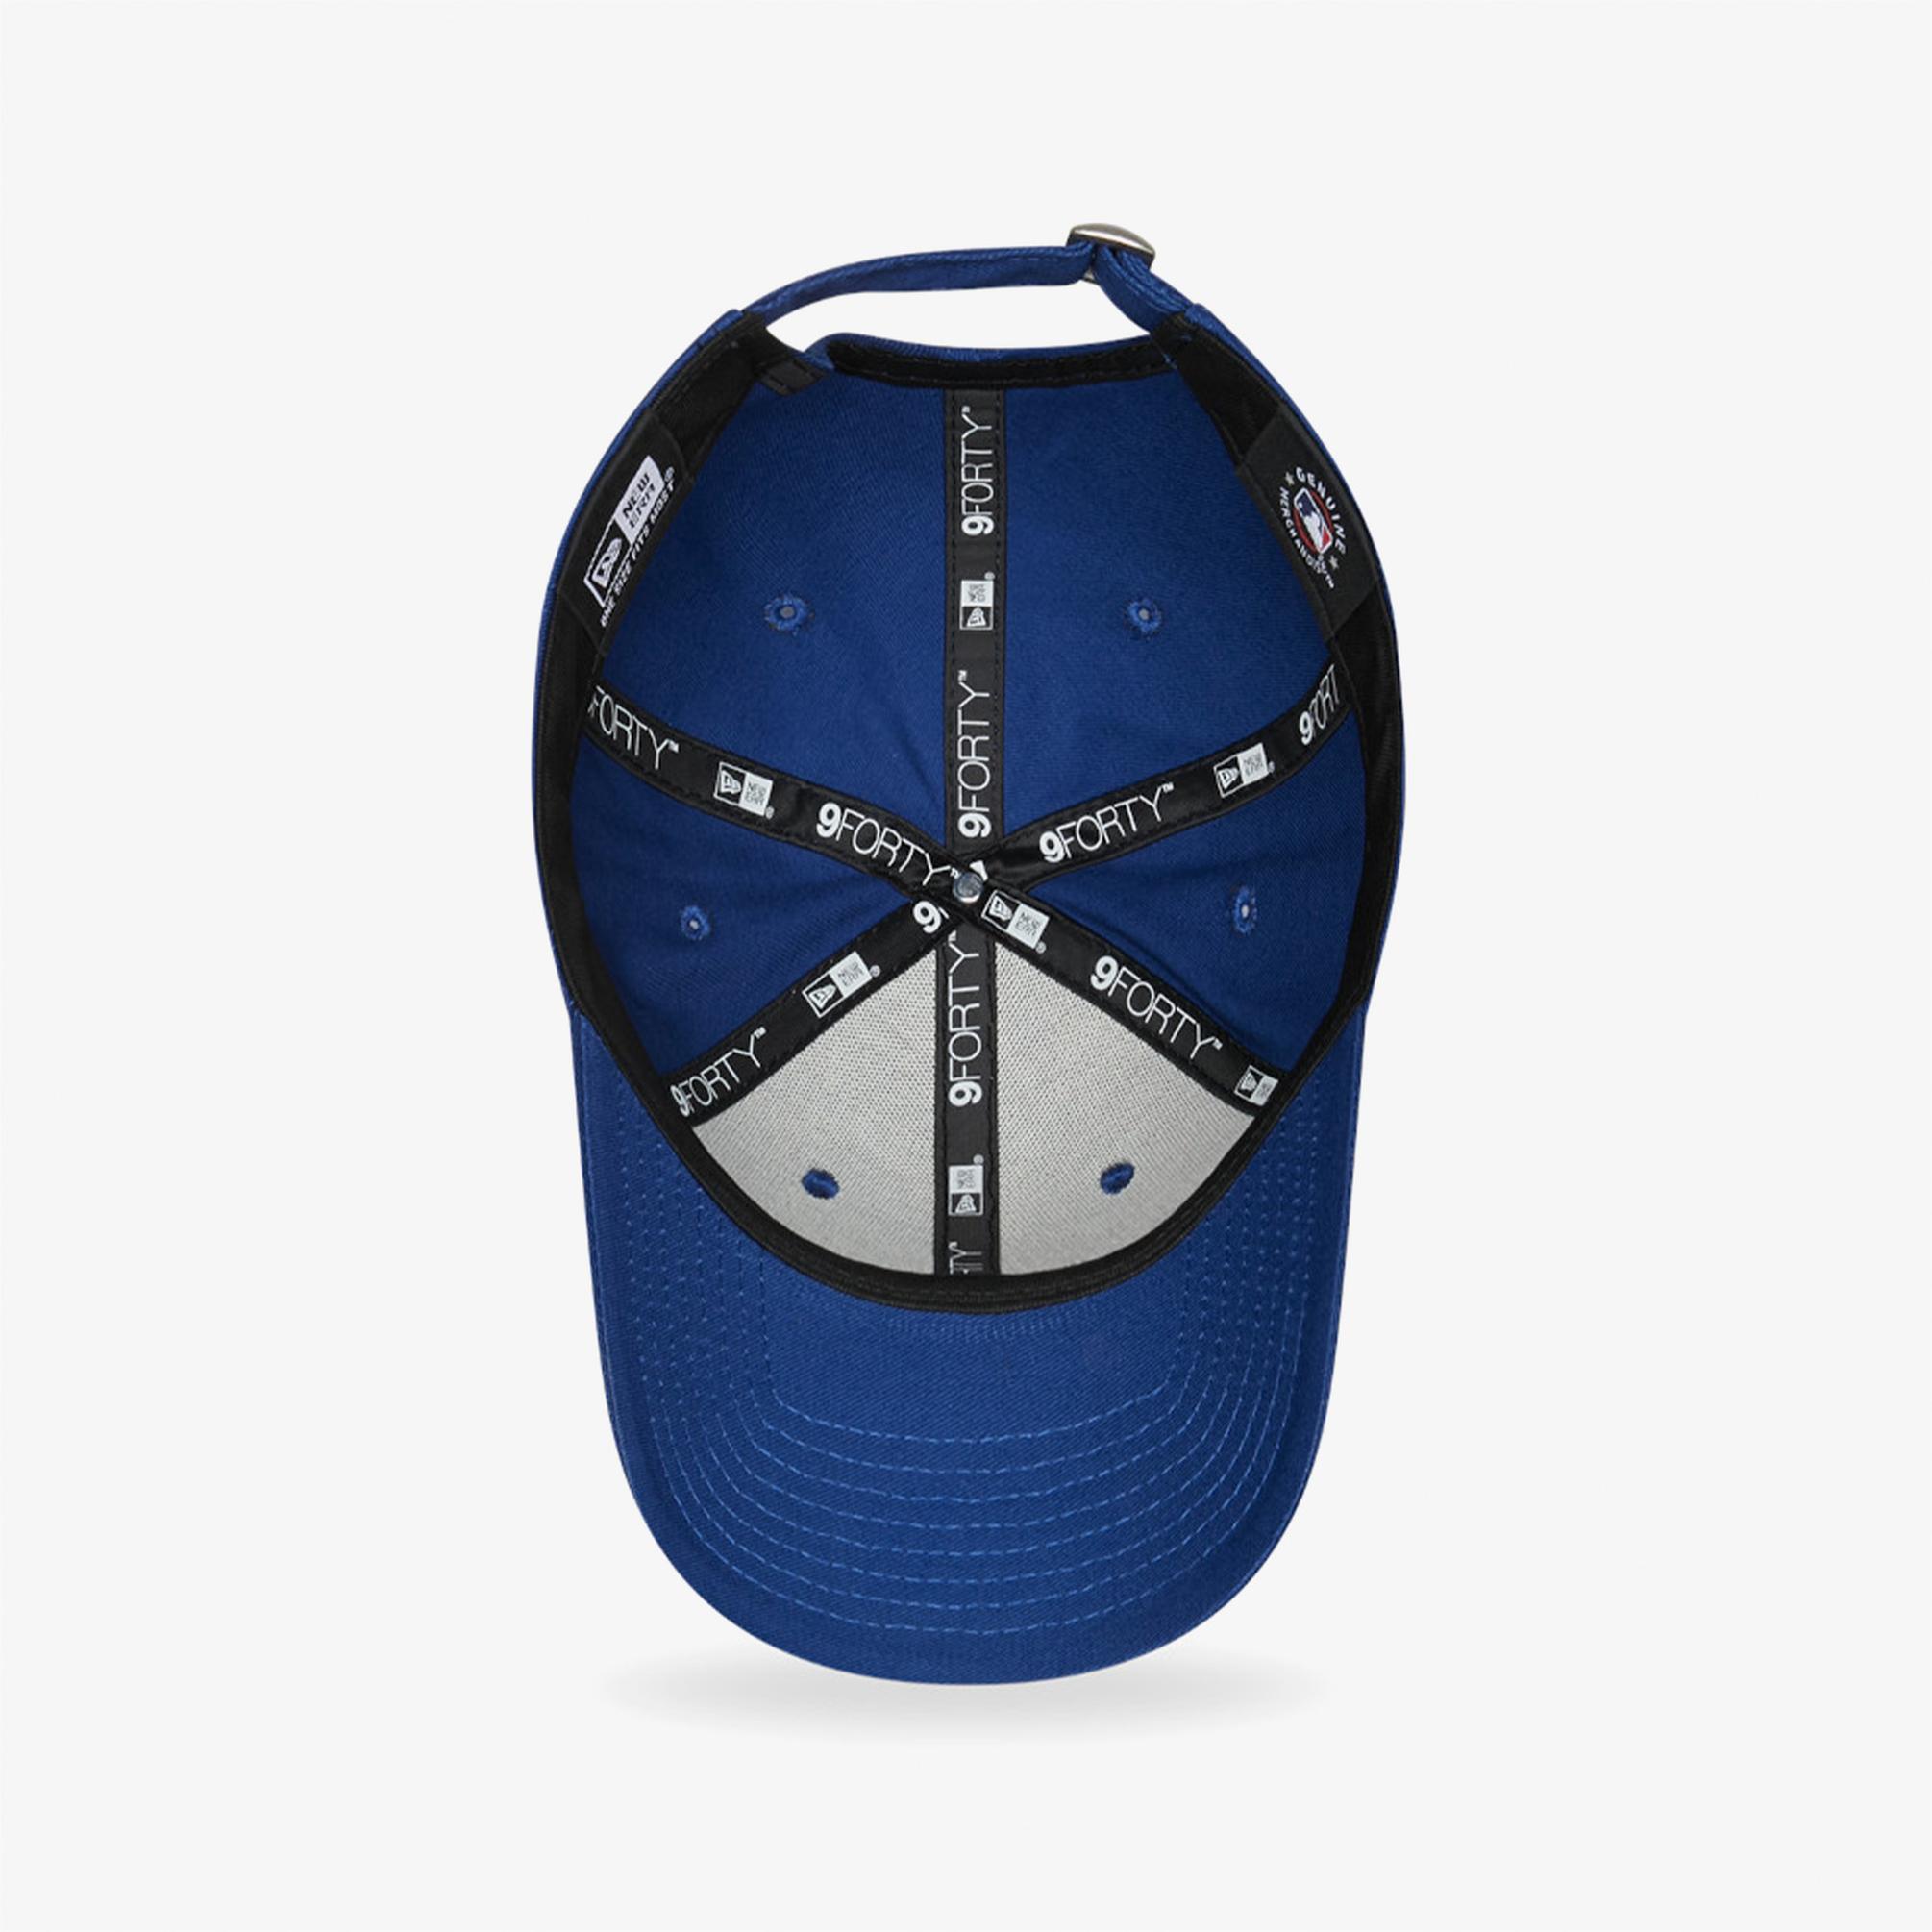  New Era New York Yankees Unisex Mavi Şapka